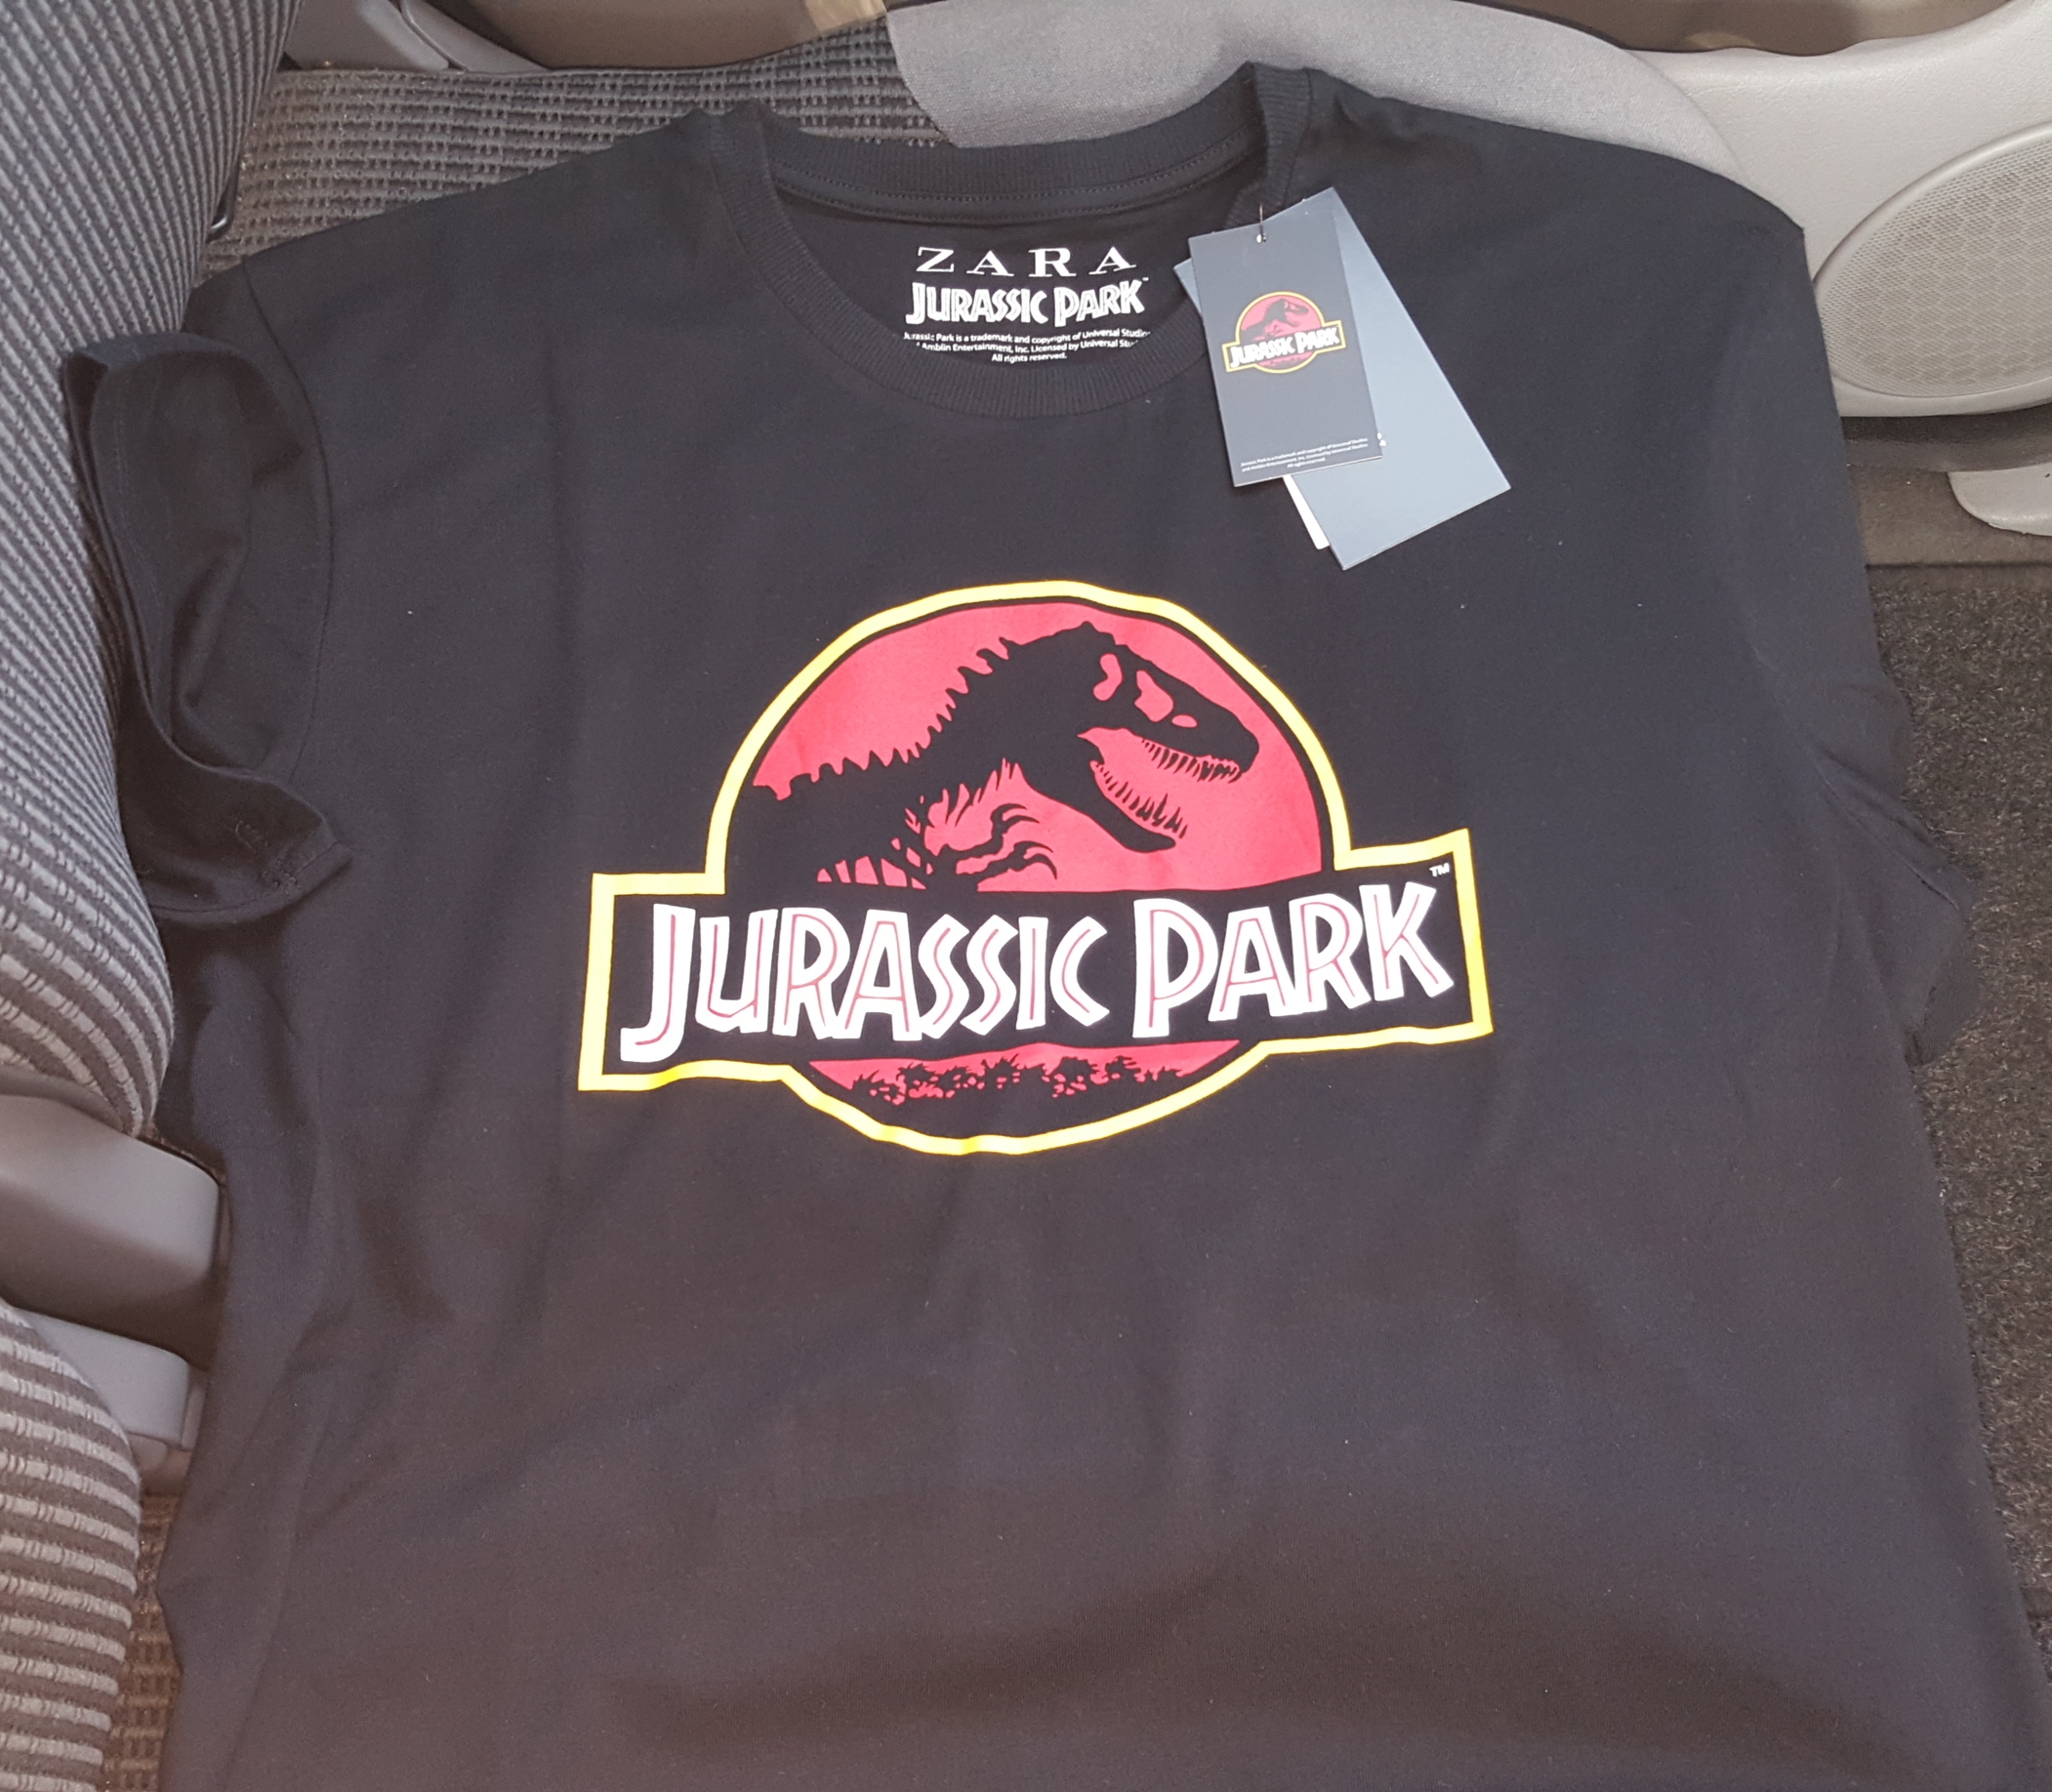 Jurassic Park color negro de Zara: Mi 15-04-2018